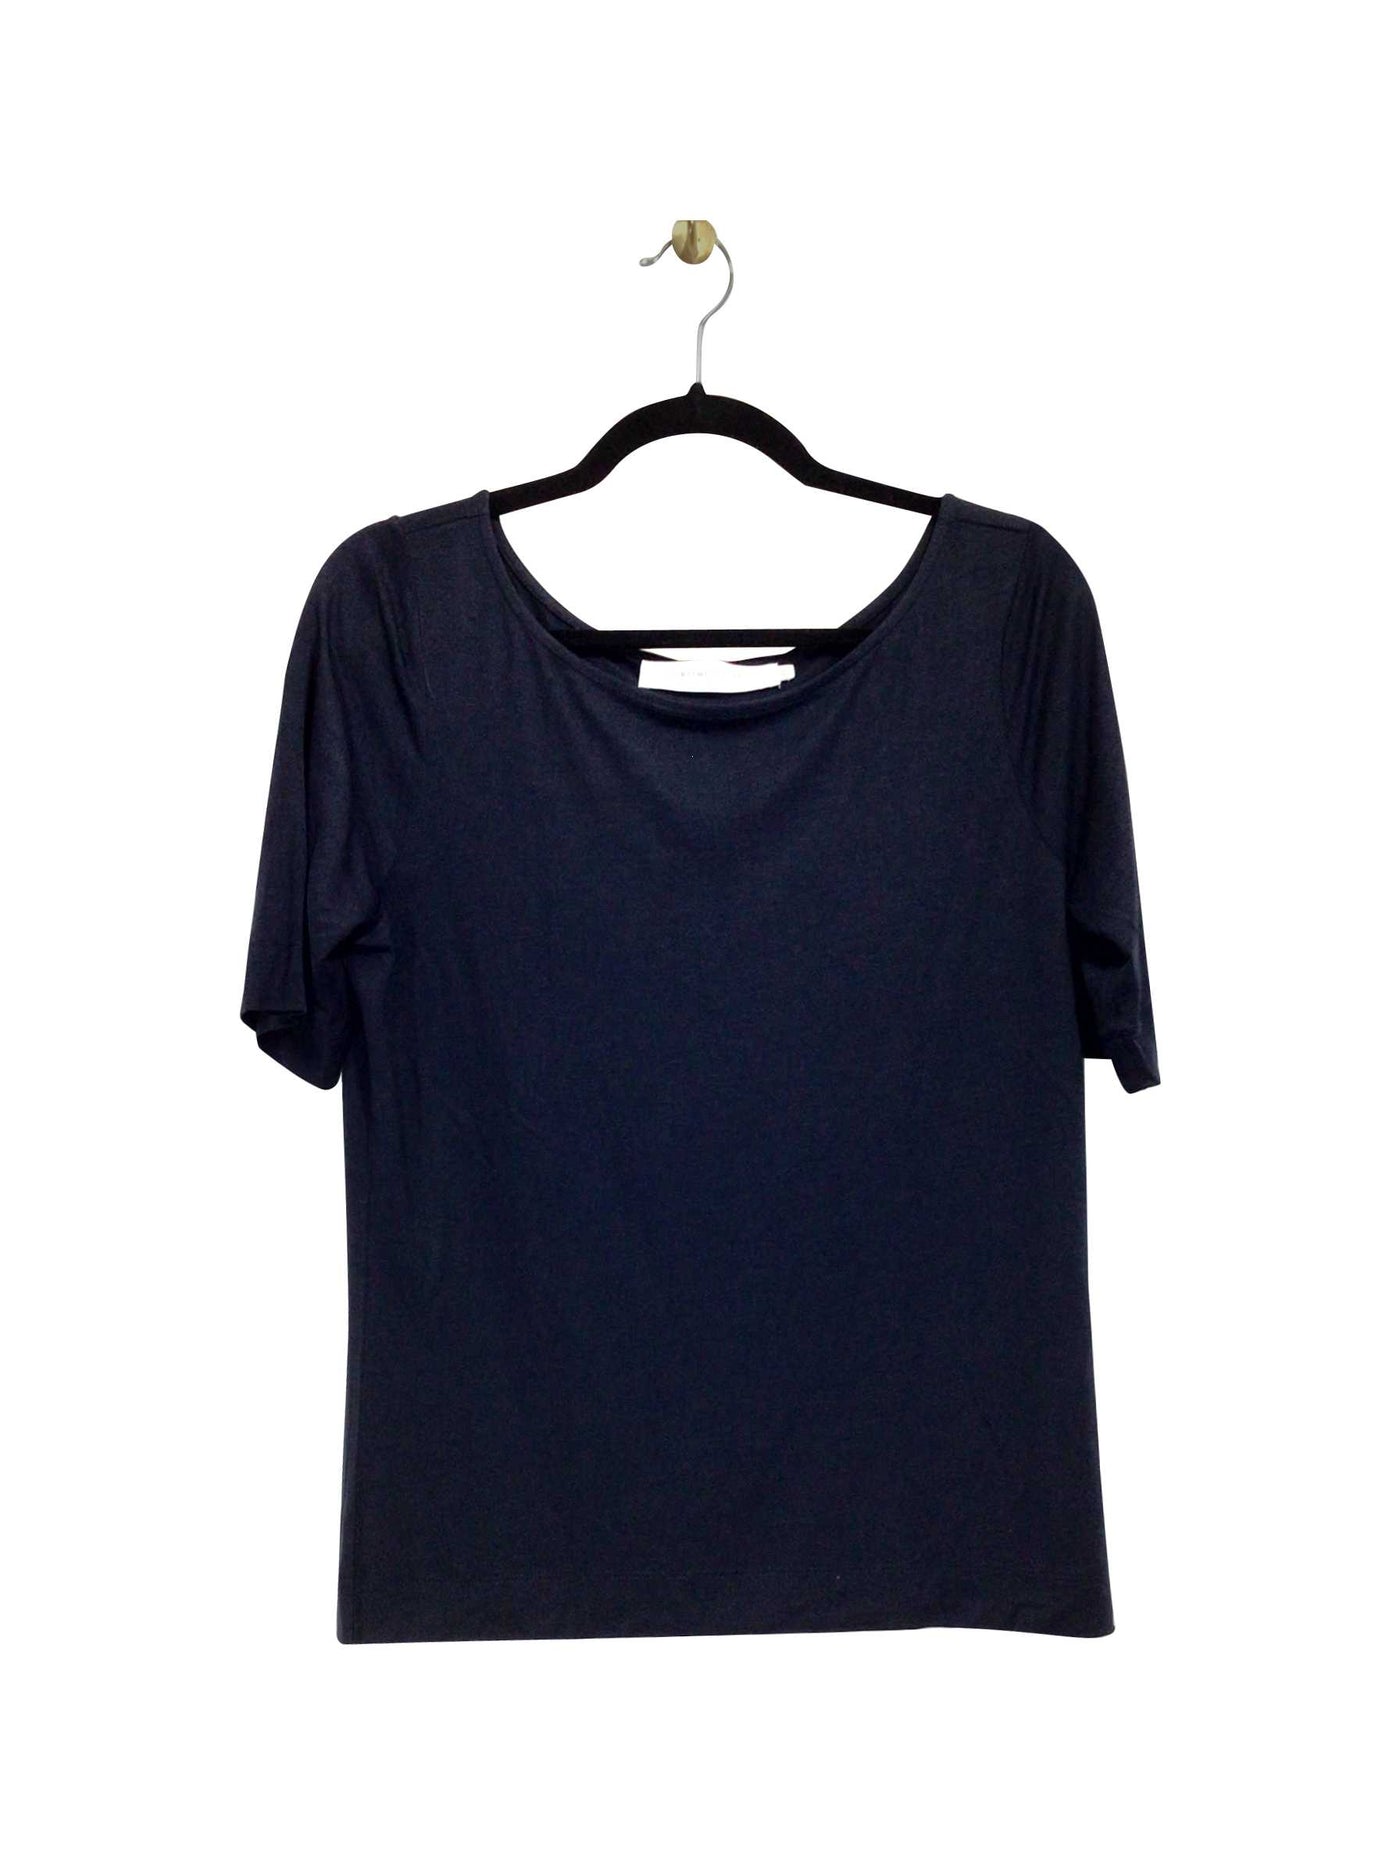 CONTEMPORAINE Regular fit T-shirt in Blue  -  M  15.00 Koop